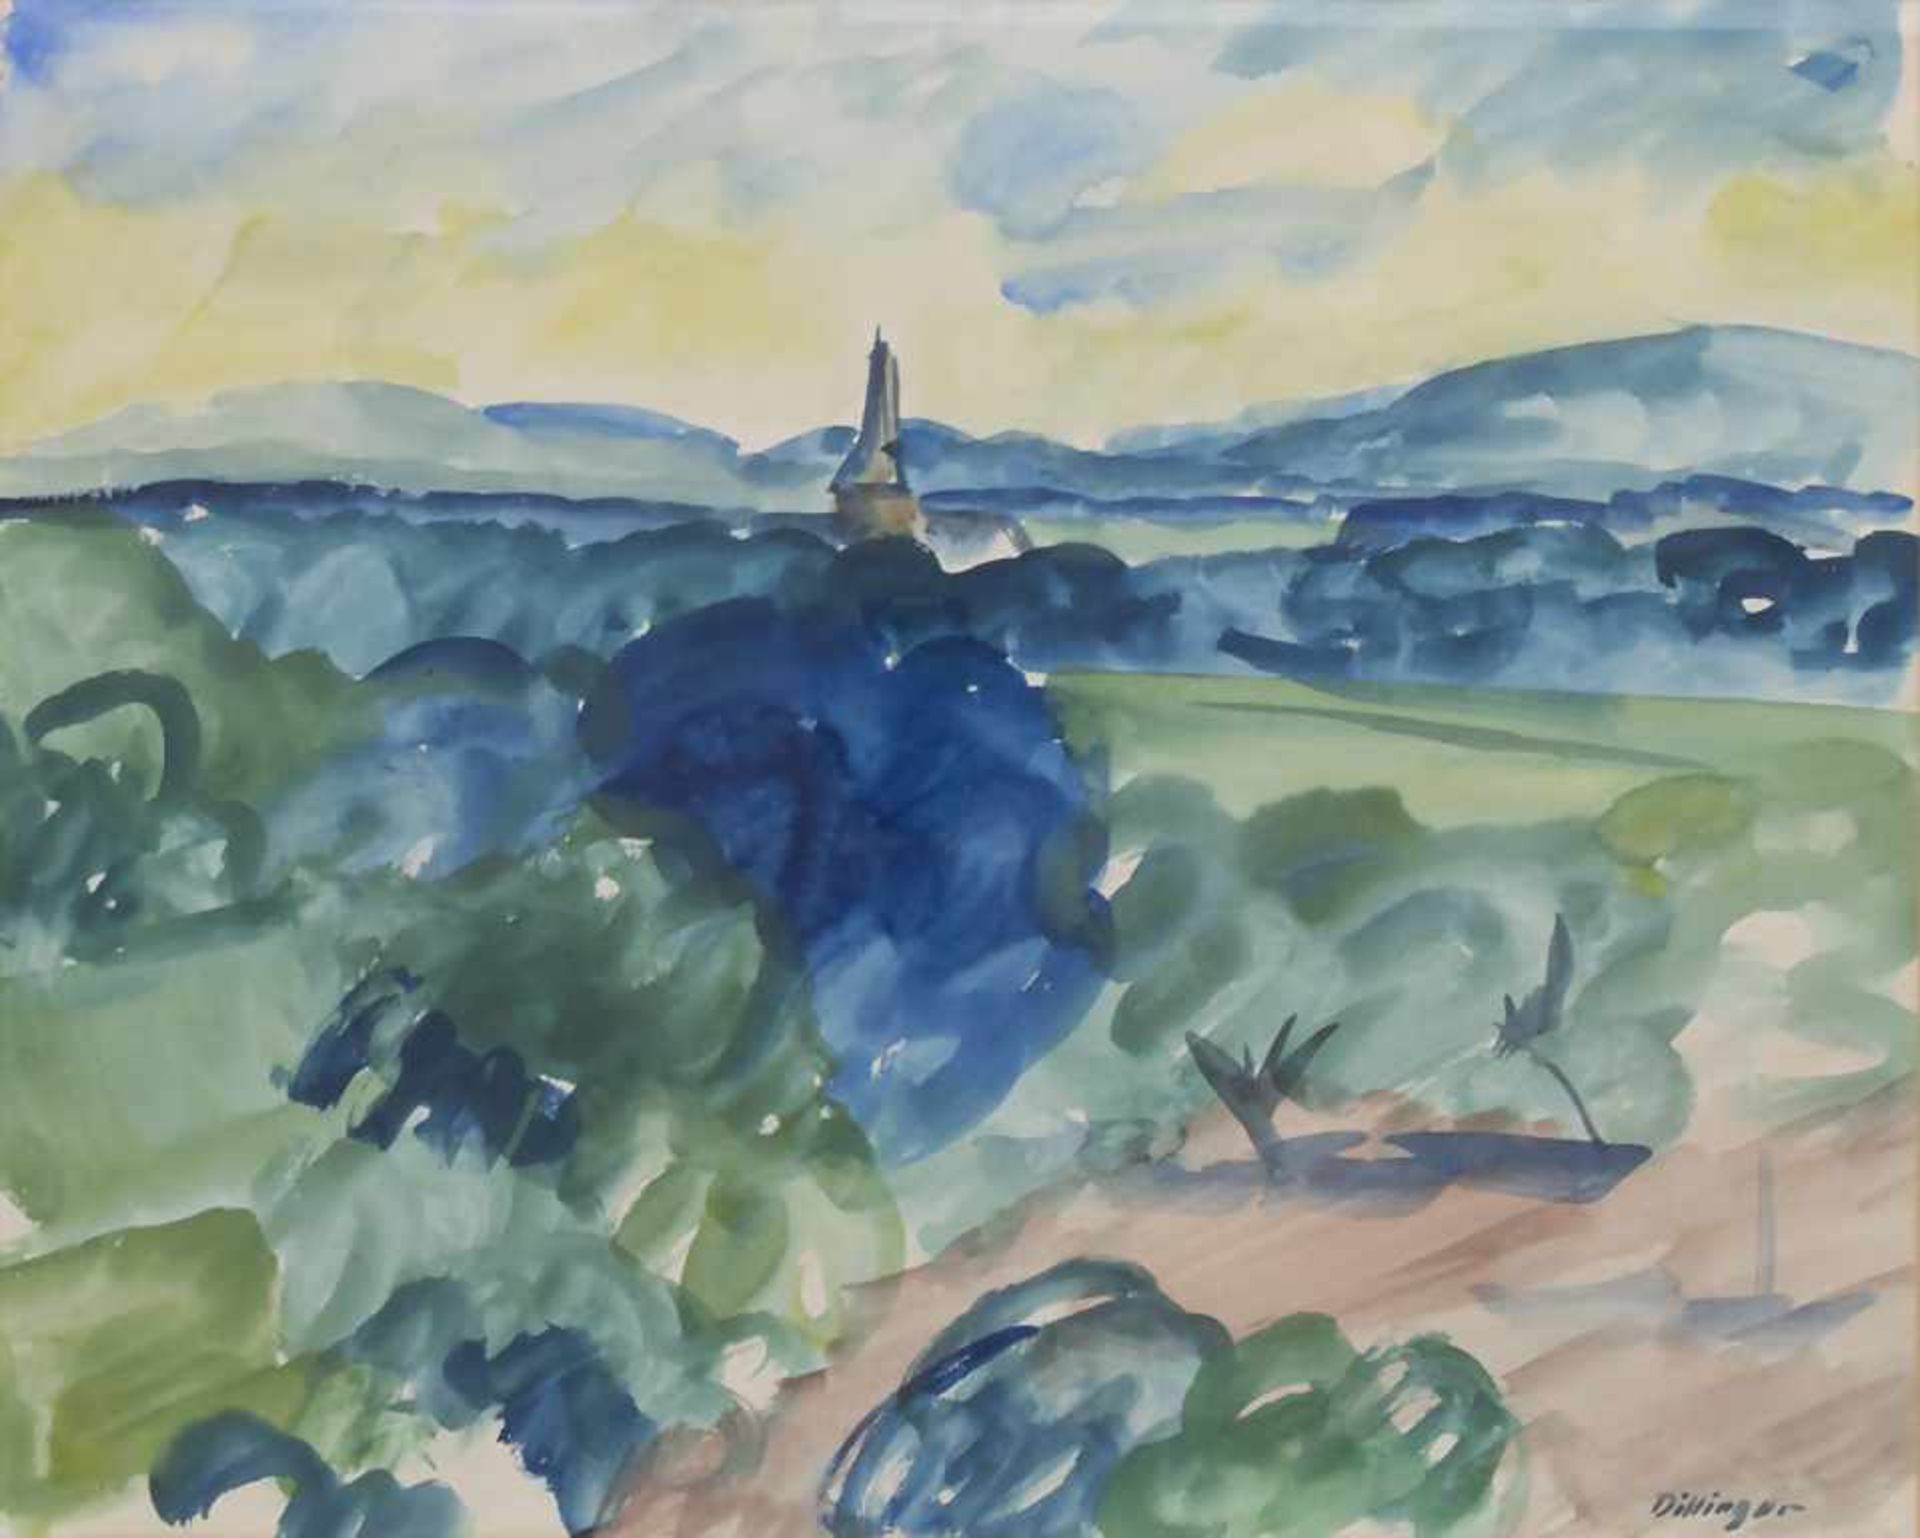 Karl Dillinger (1882-1941), 'Kirchturm in Pfälzer Landschaft' / 'A Palatinate landscape with a